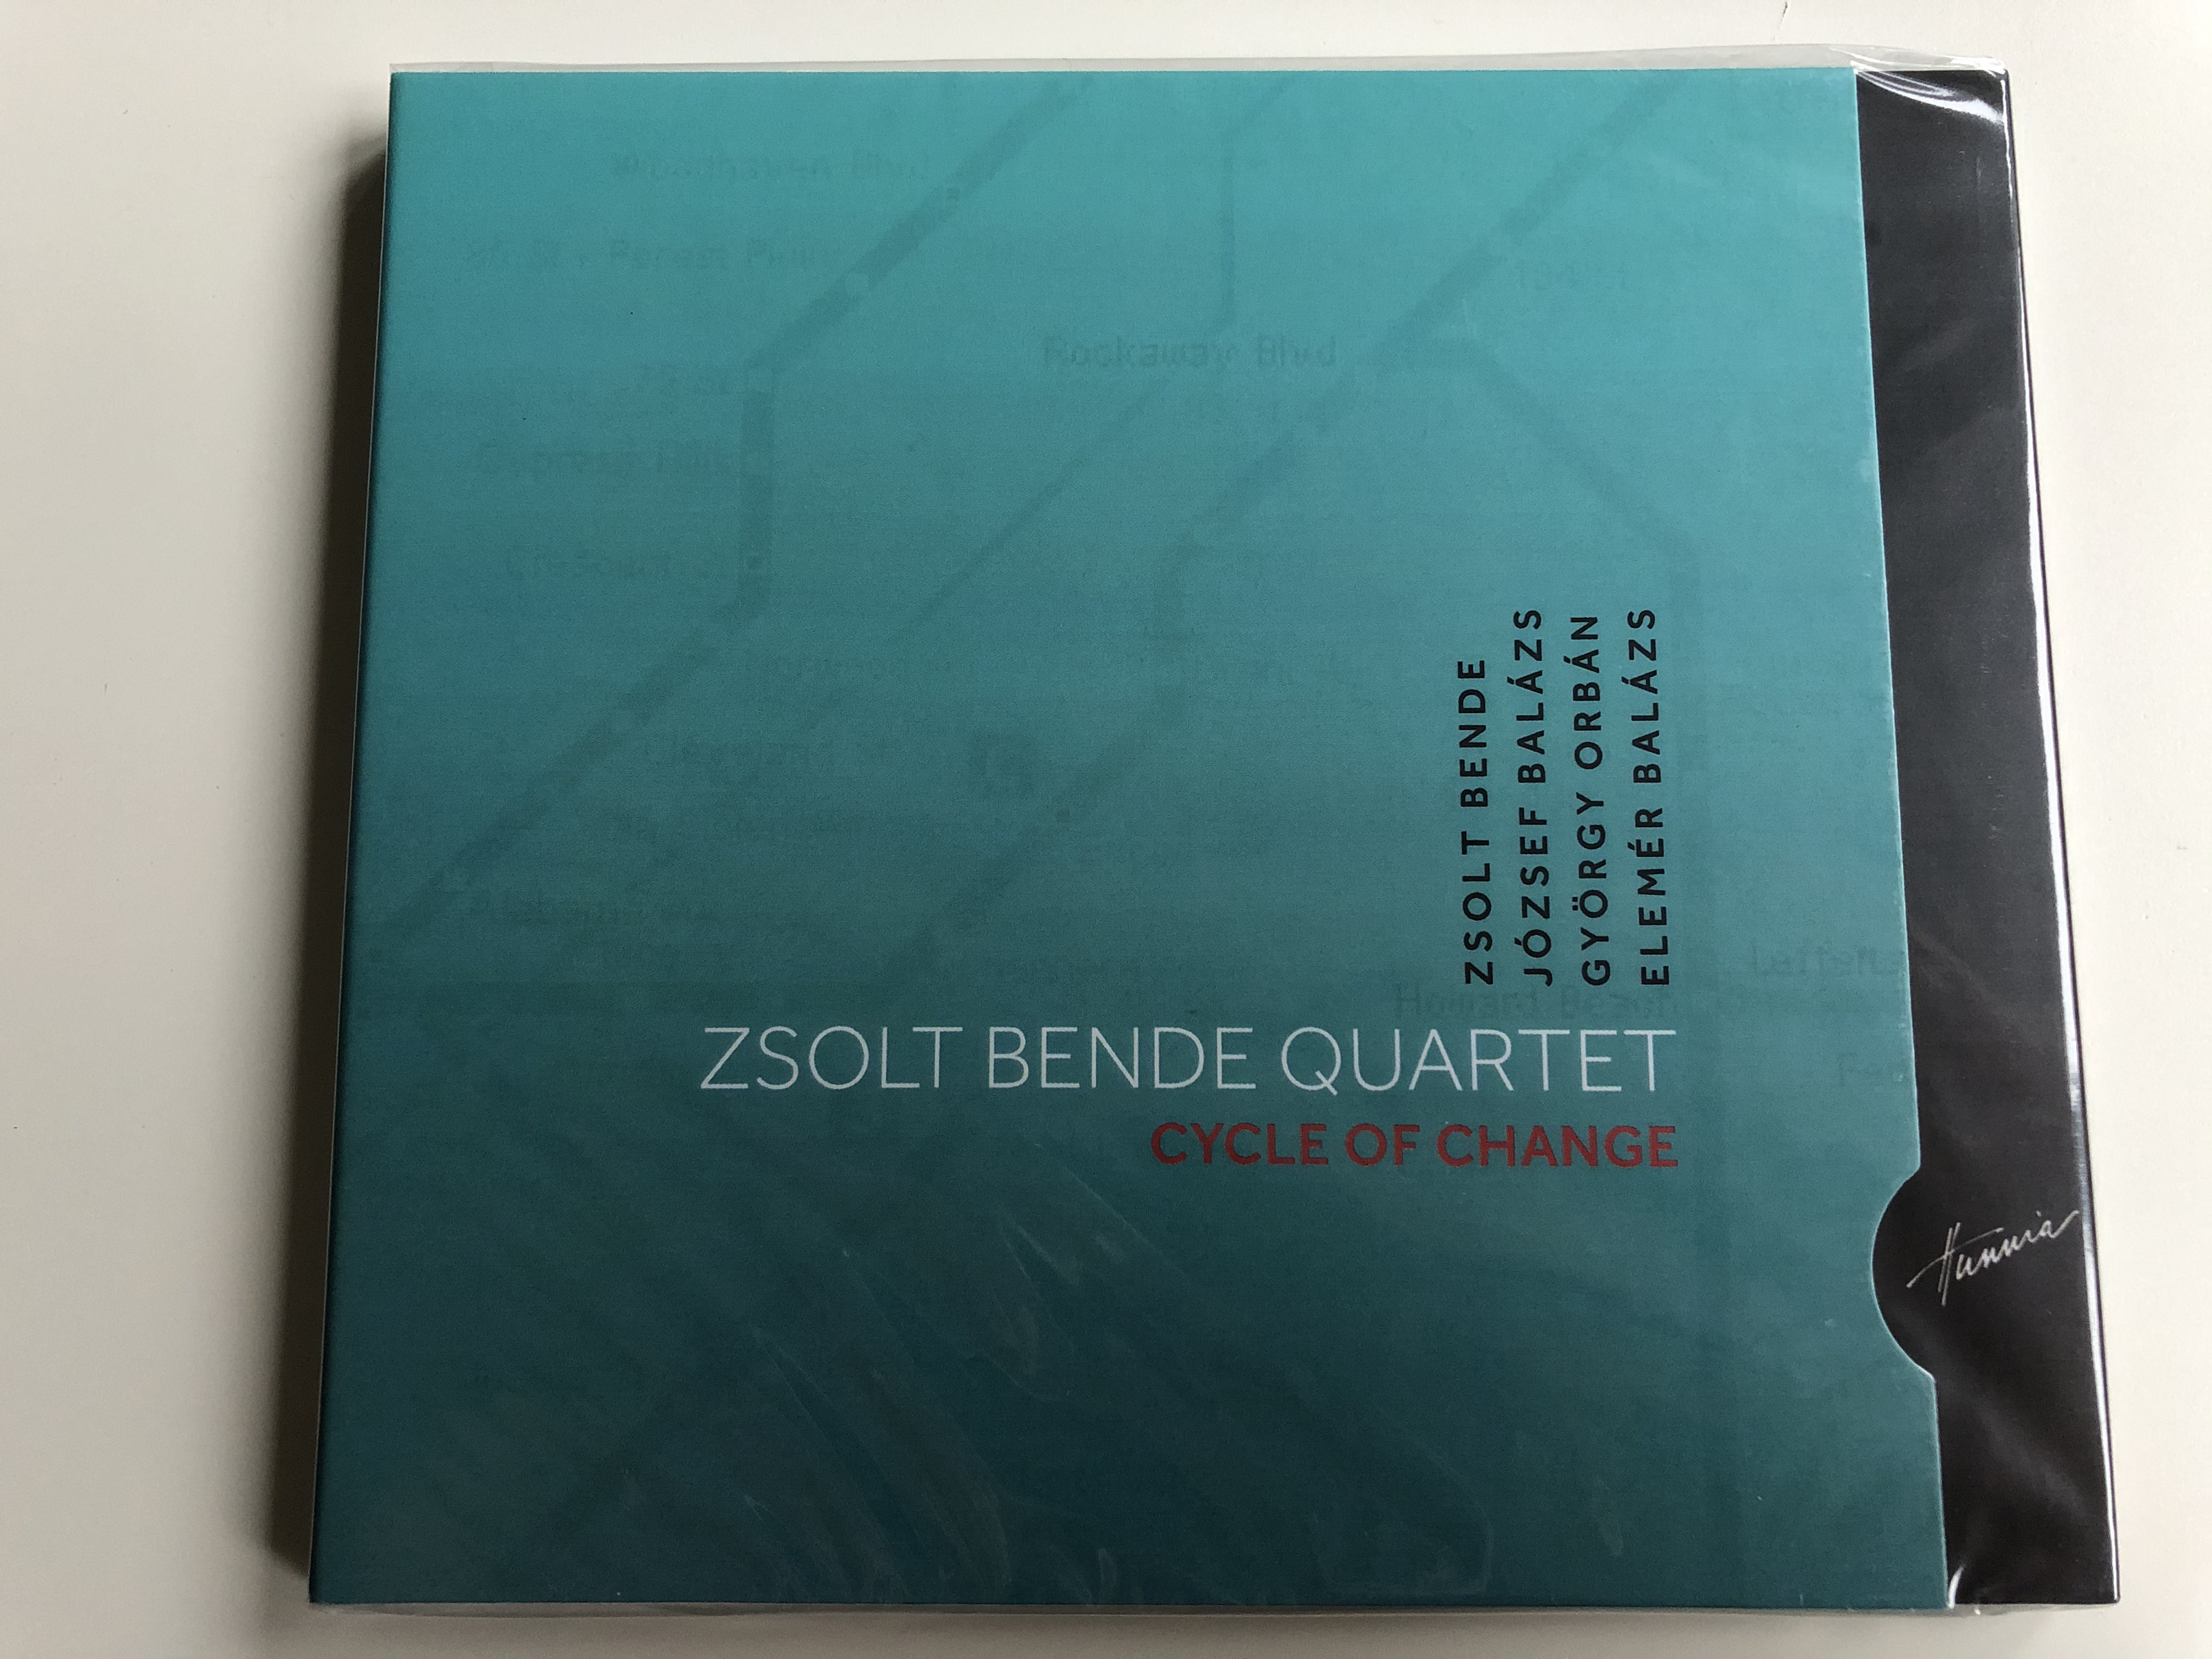 zsolt-bende-quartet-cycle-of-change-zsolt-bende-jozsef-balazs-gyorgy-orban-elemer-balazs-hunnia-records-film-production-audio-cd-2017-hrcd1736-1-.jpg